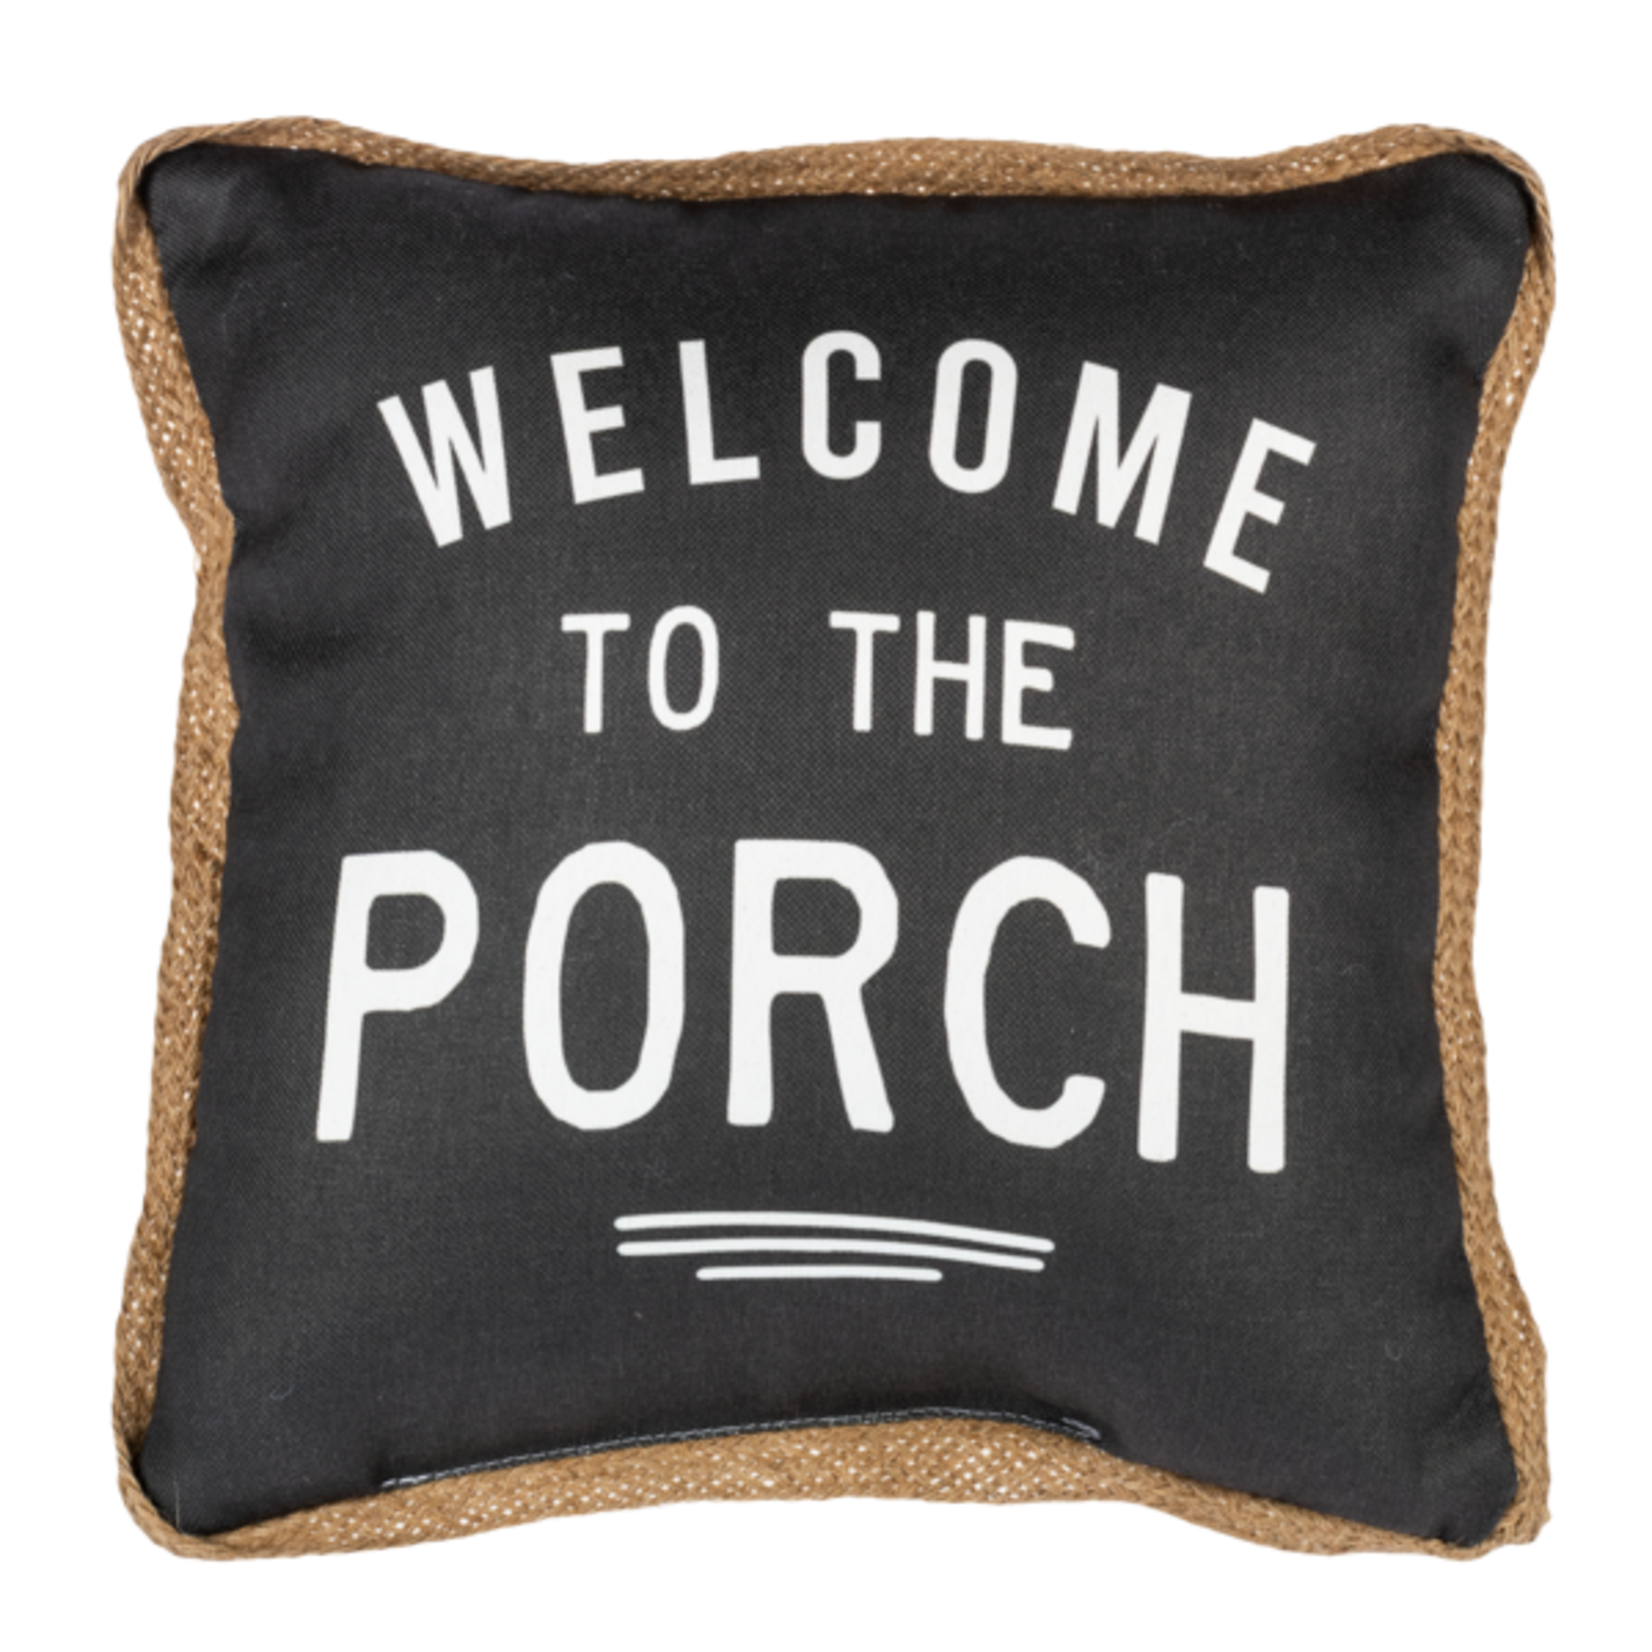 Ganz Black Porch Pillow Welcome to the Porch